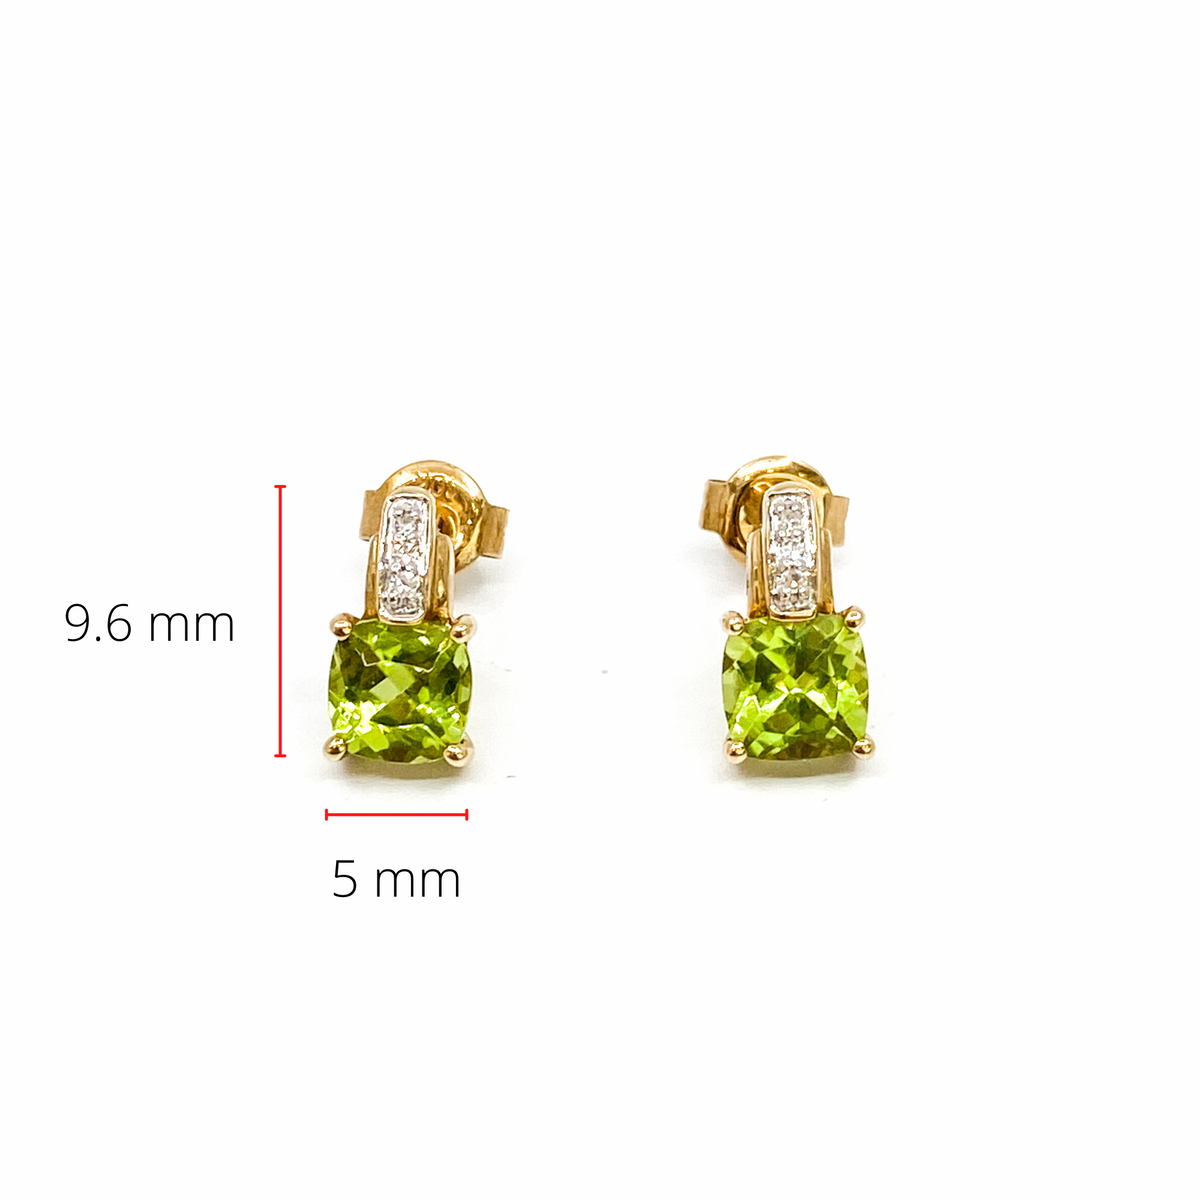 10K Yellow Gold 1.40cttw Genuine Peridot and 0.025cttw Diamond Earrings